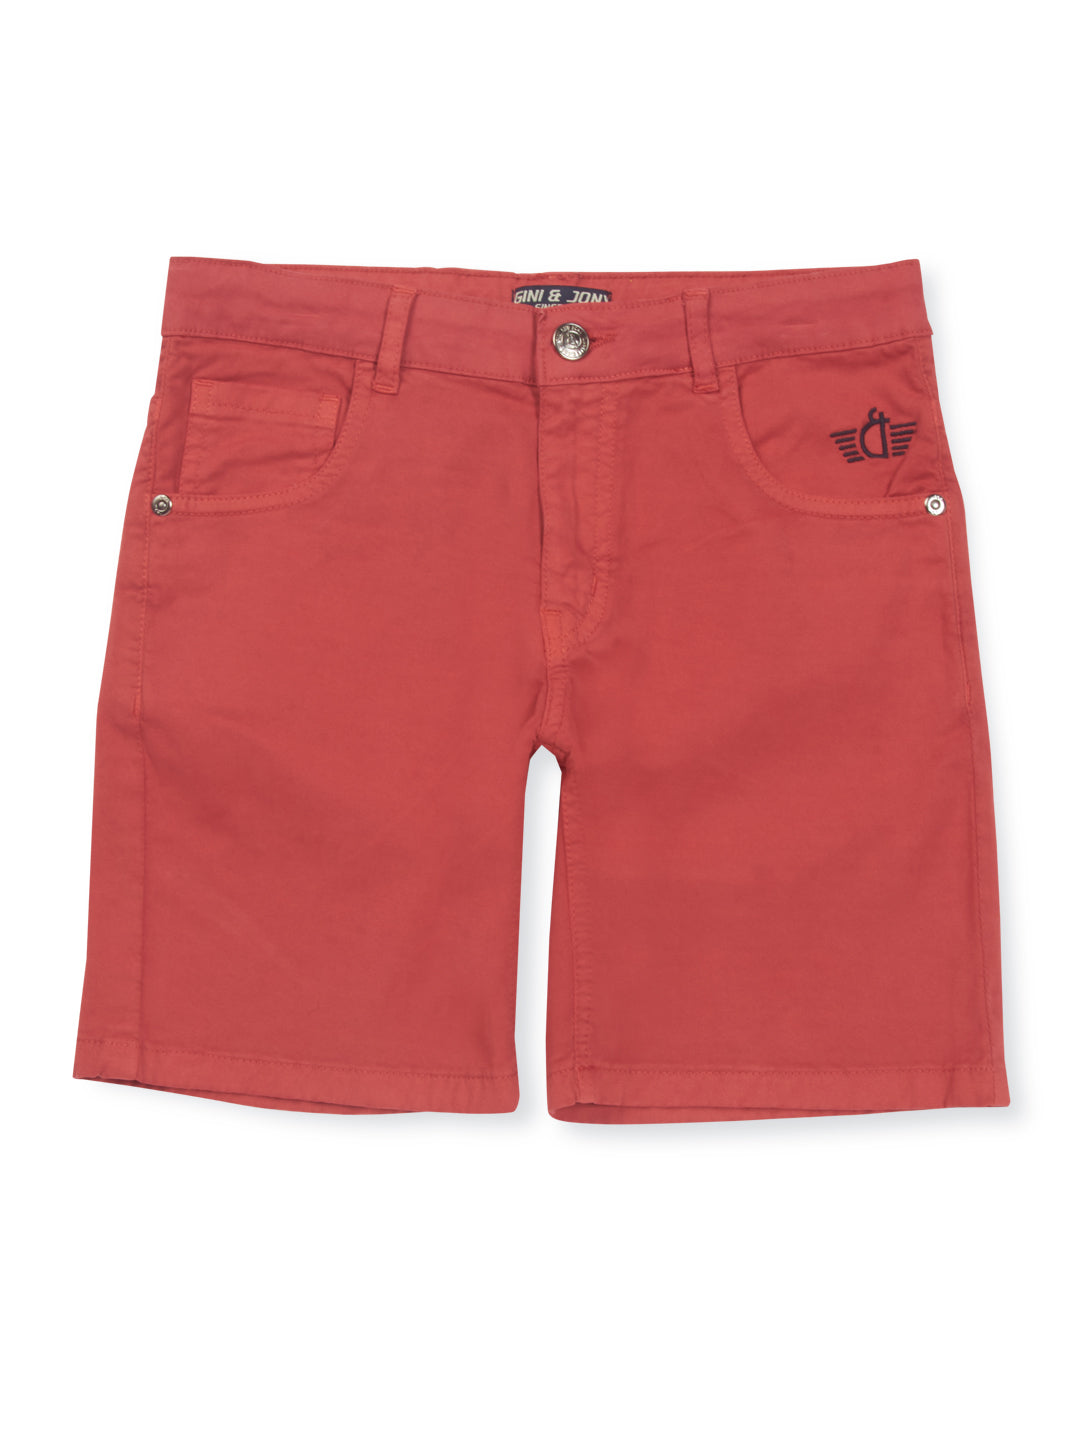 Boys Red Cotton Denim Solid Shorts